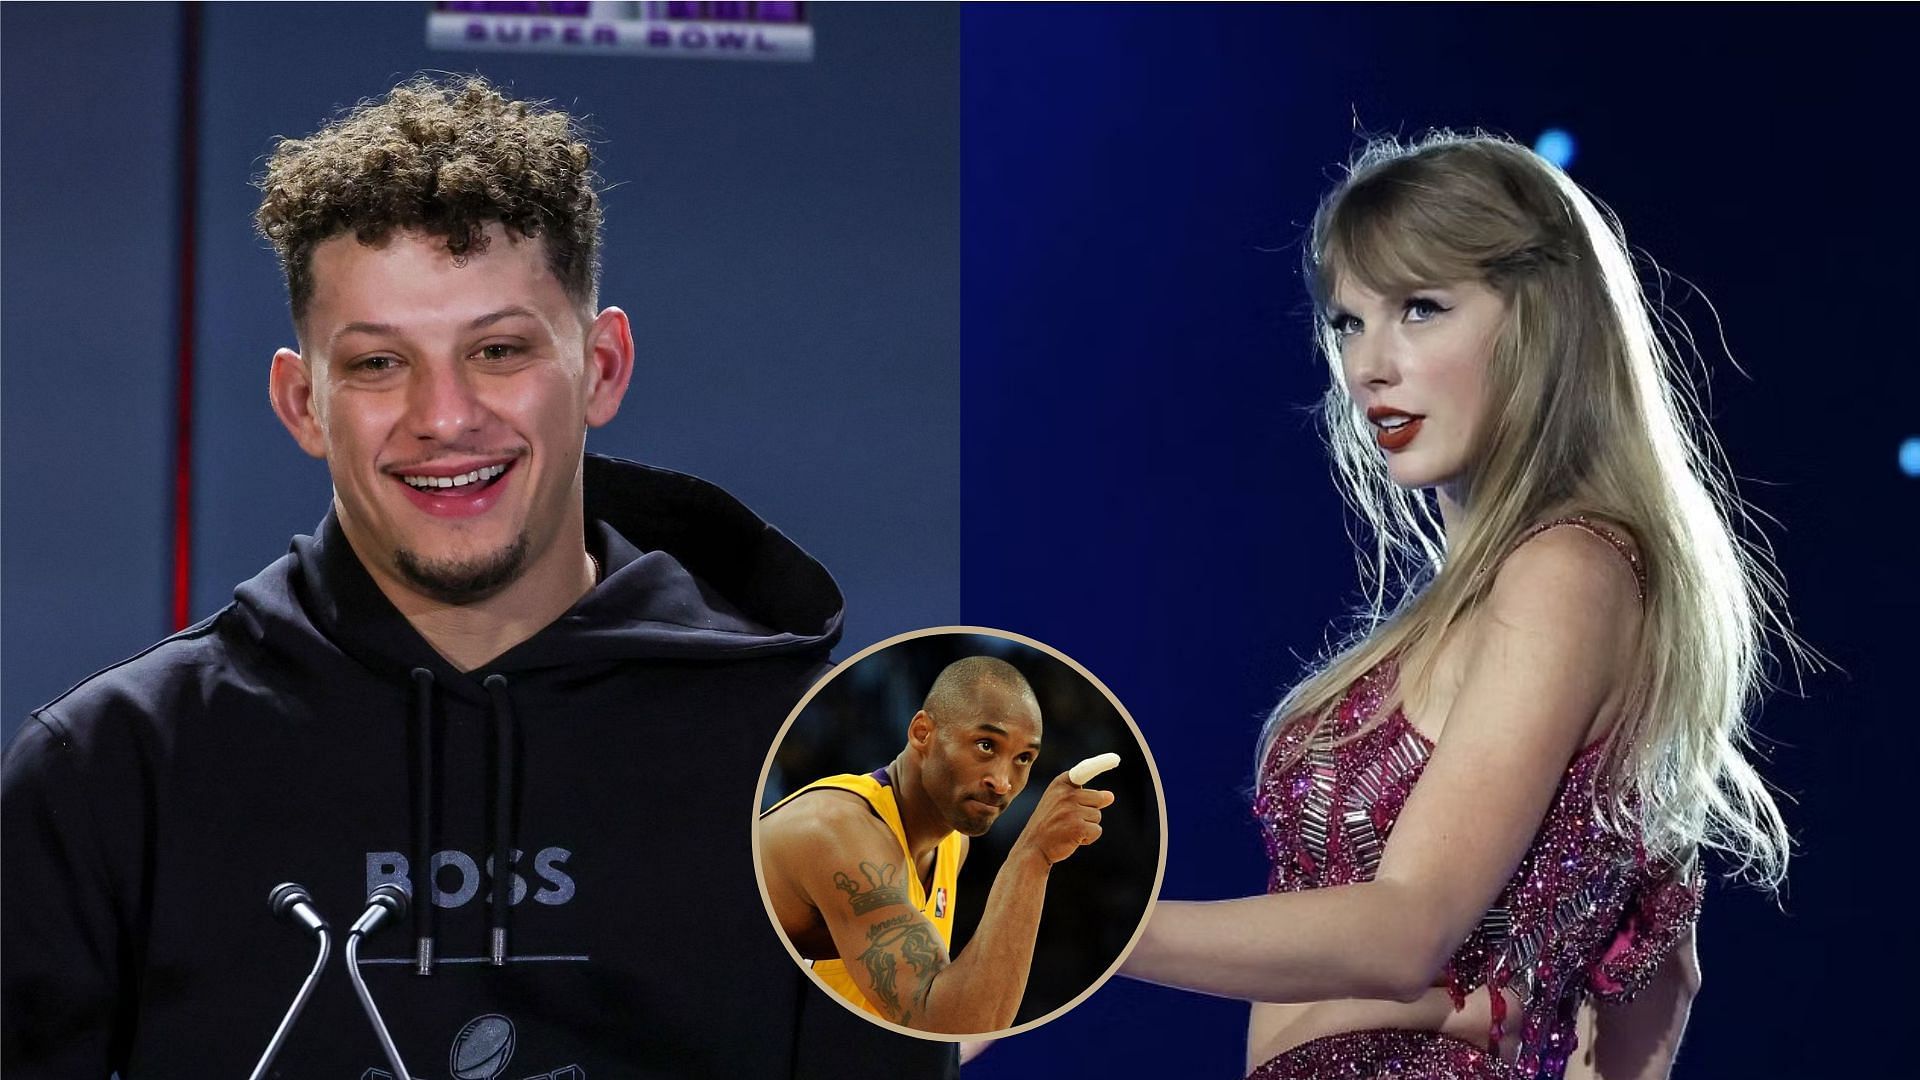 Patrick Mahomes sheds light on Taylor Swift